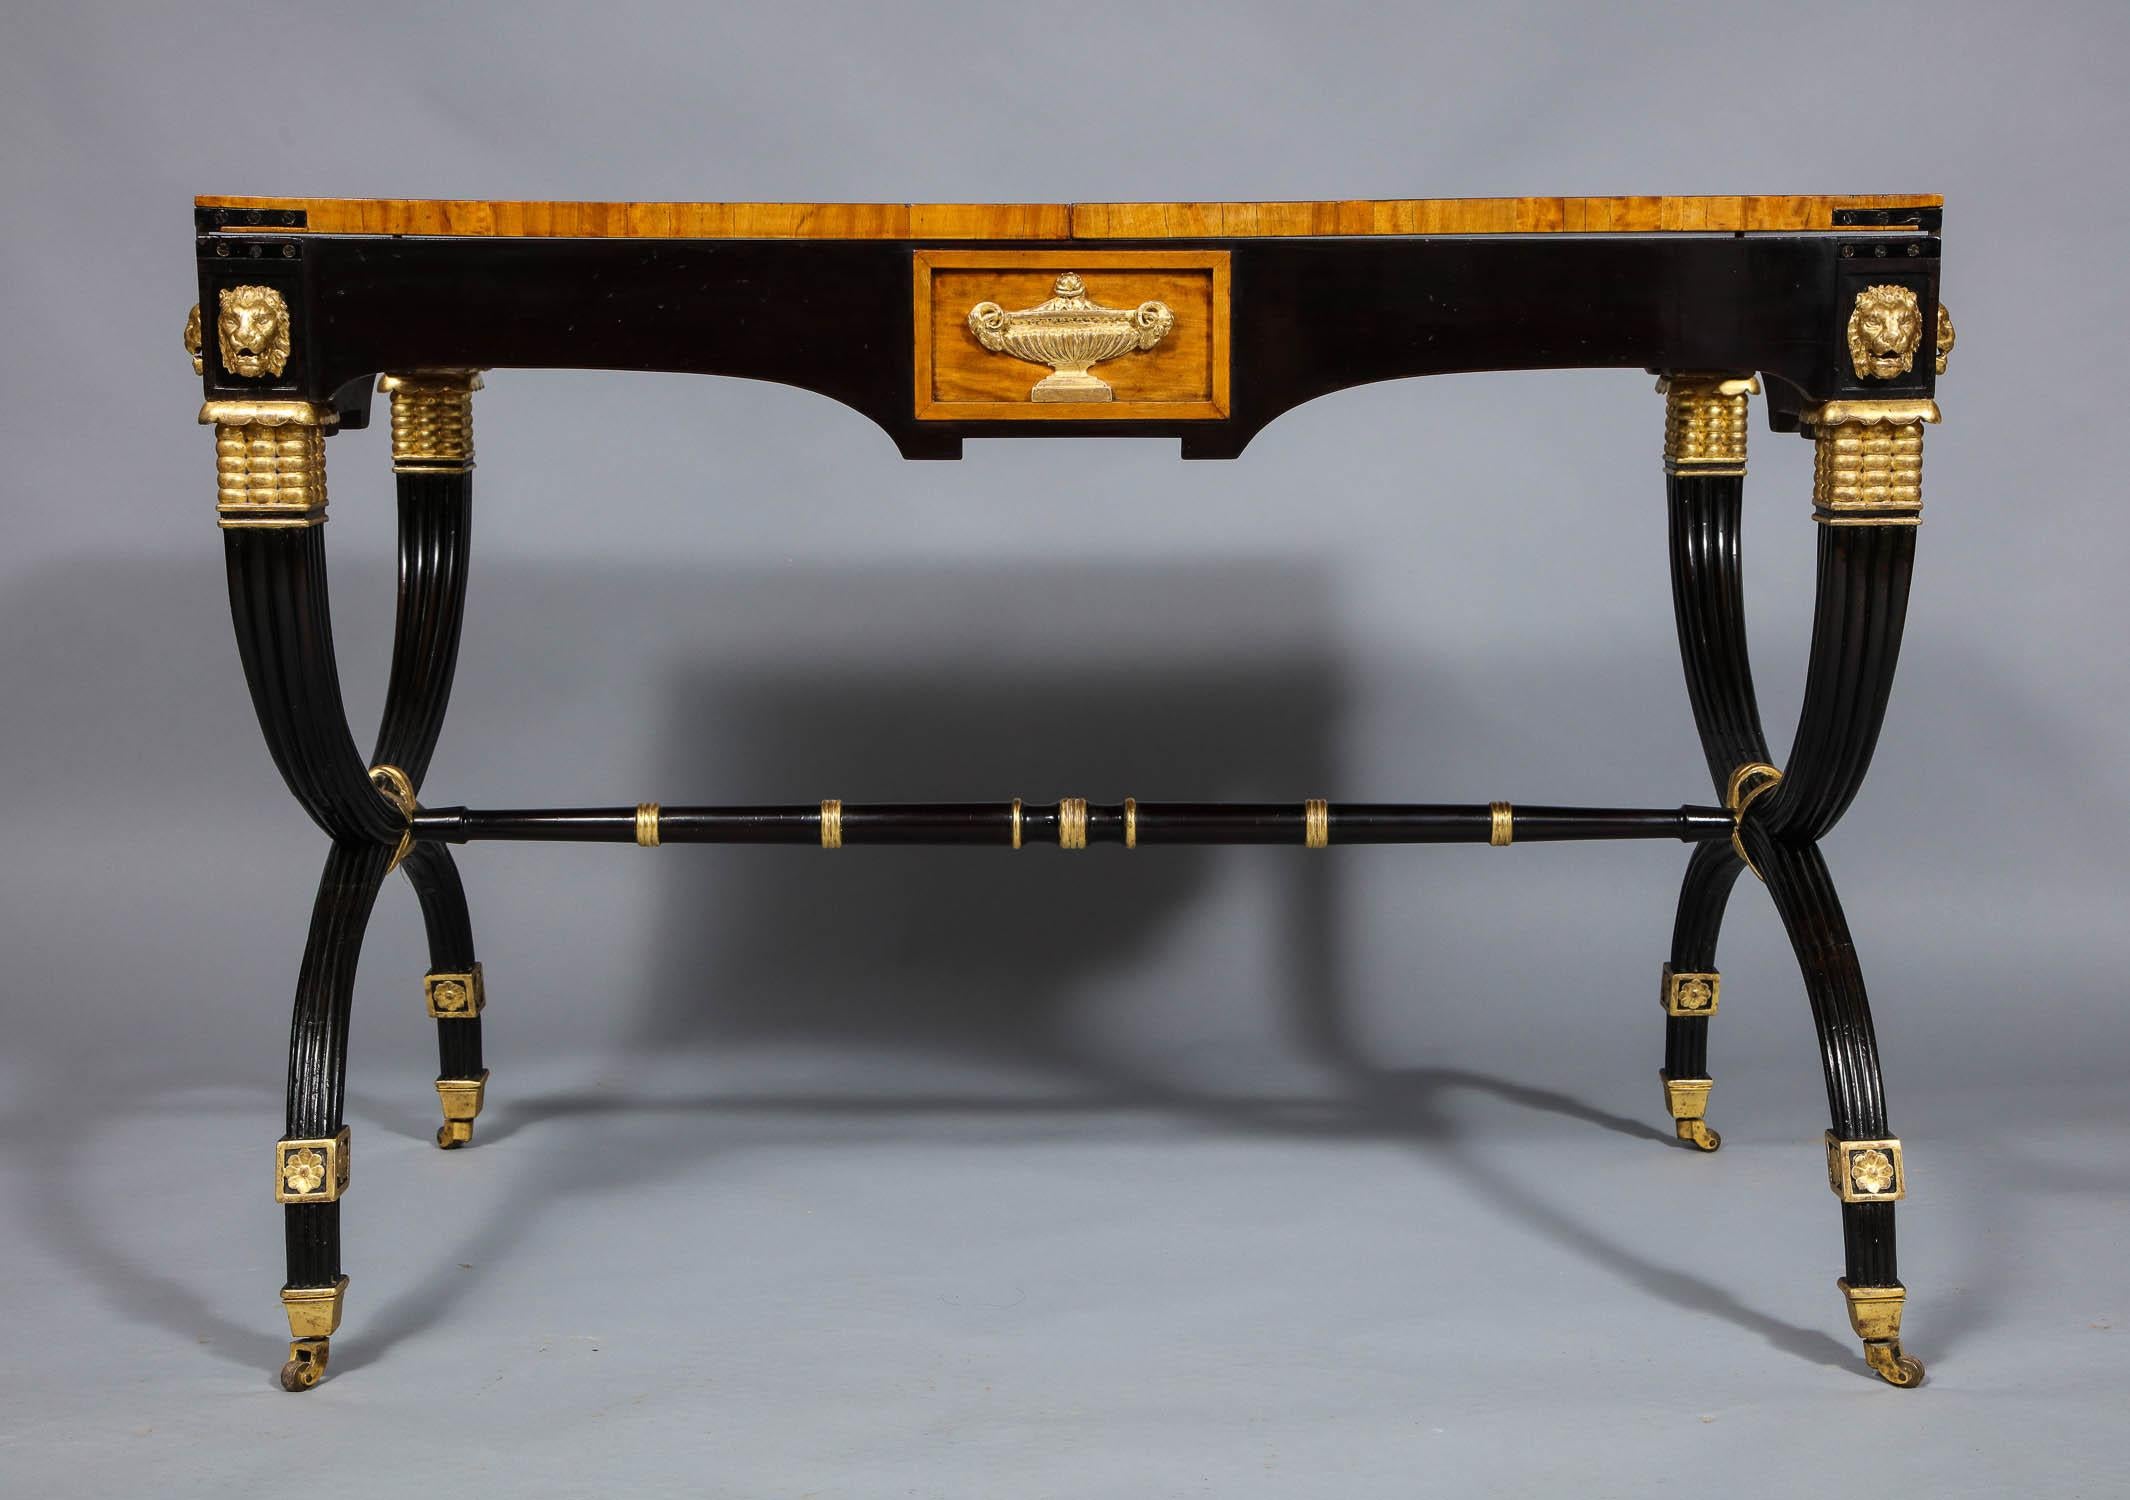 Regency Revival English Regency Style Flap Top Table